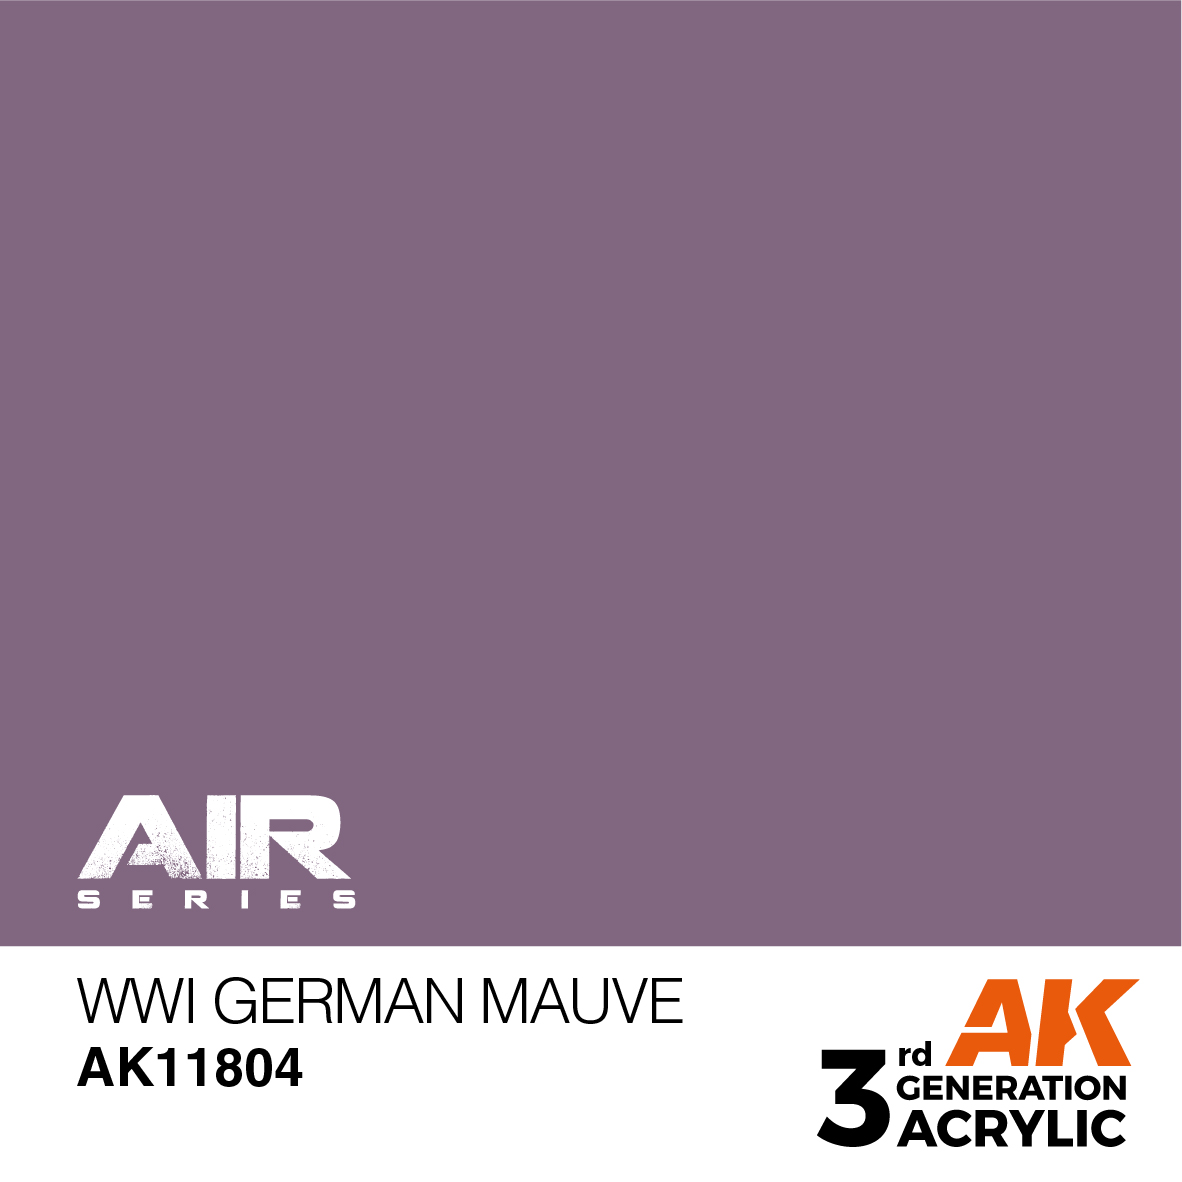 WWI German Mauve – AIR